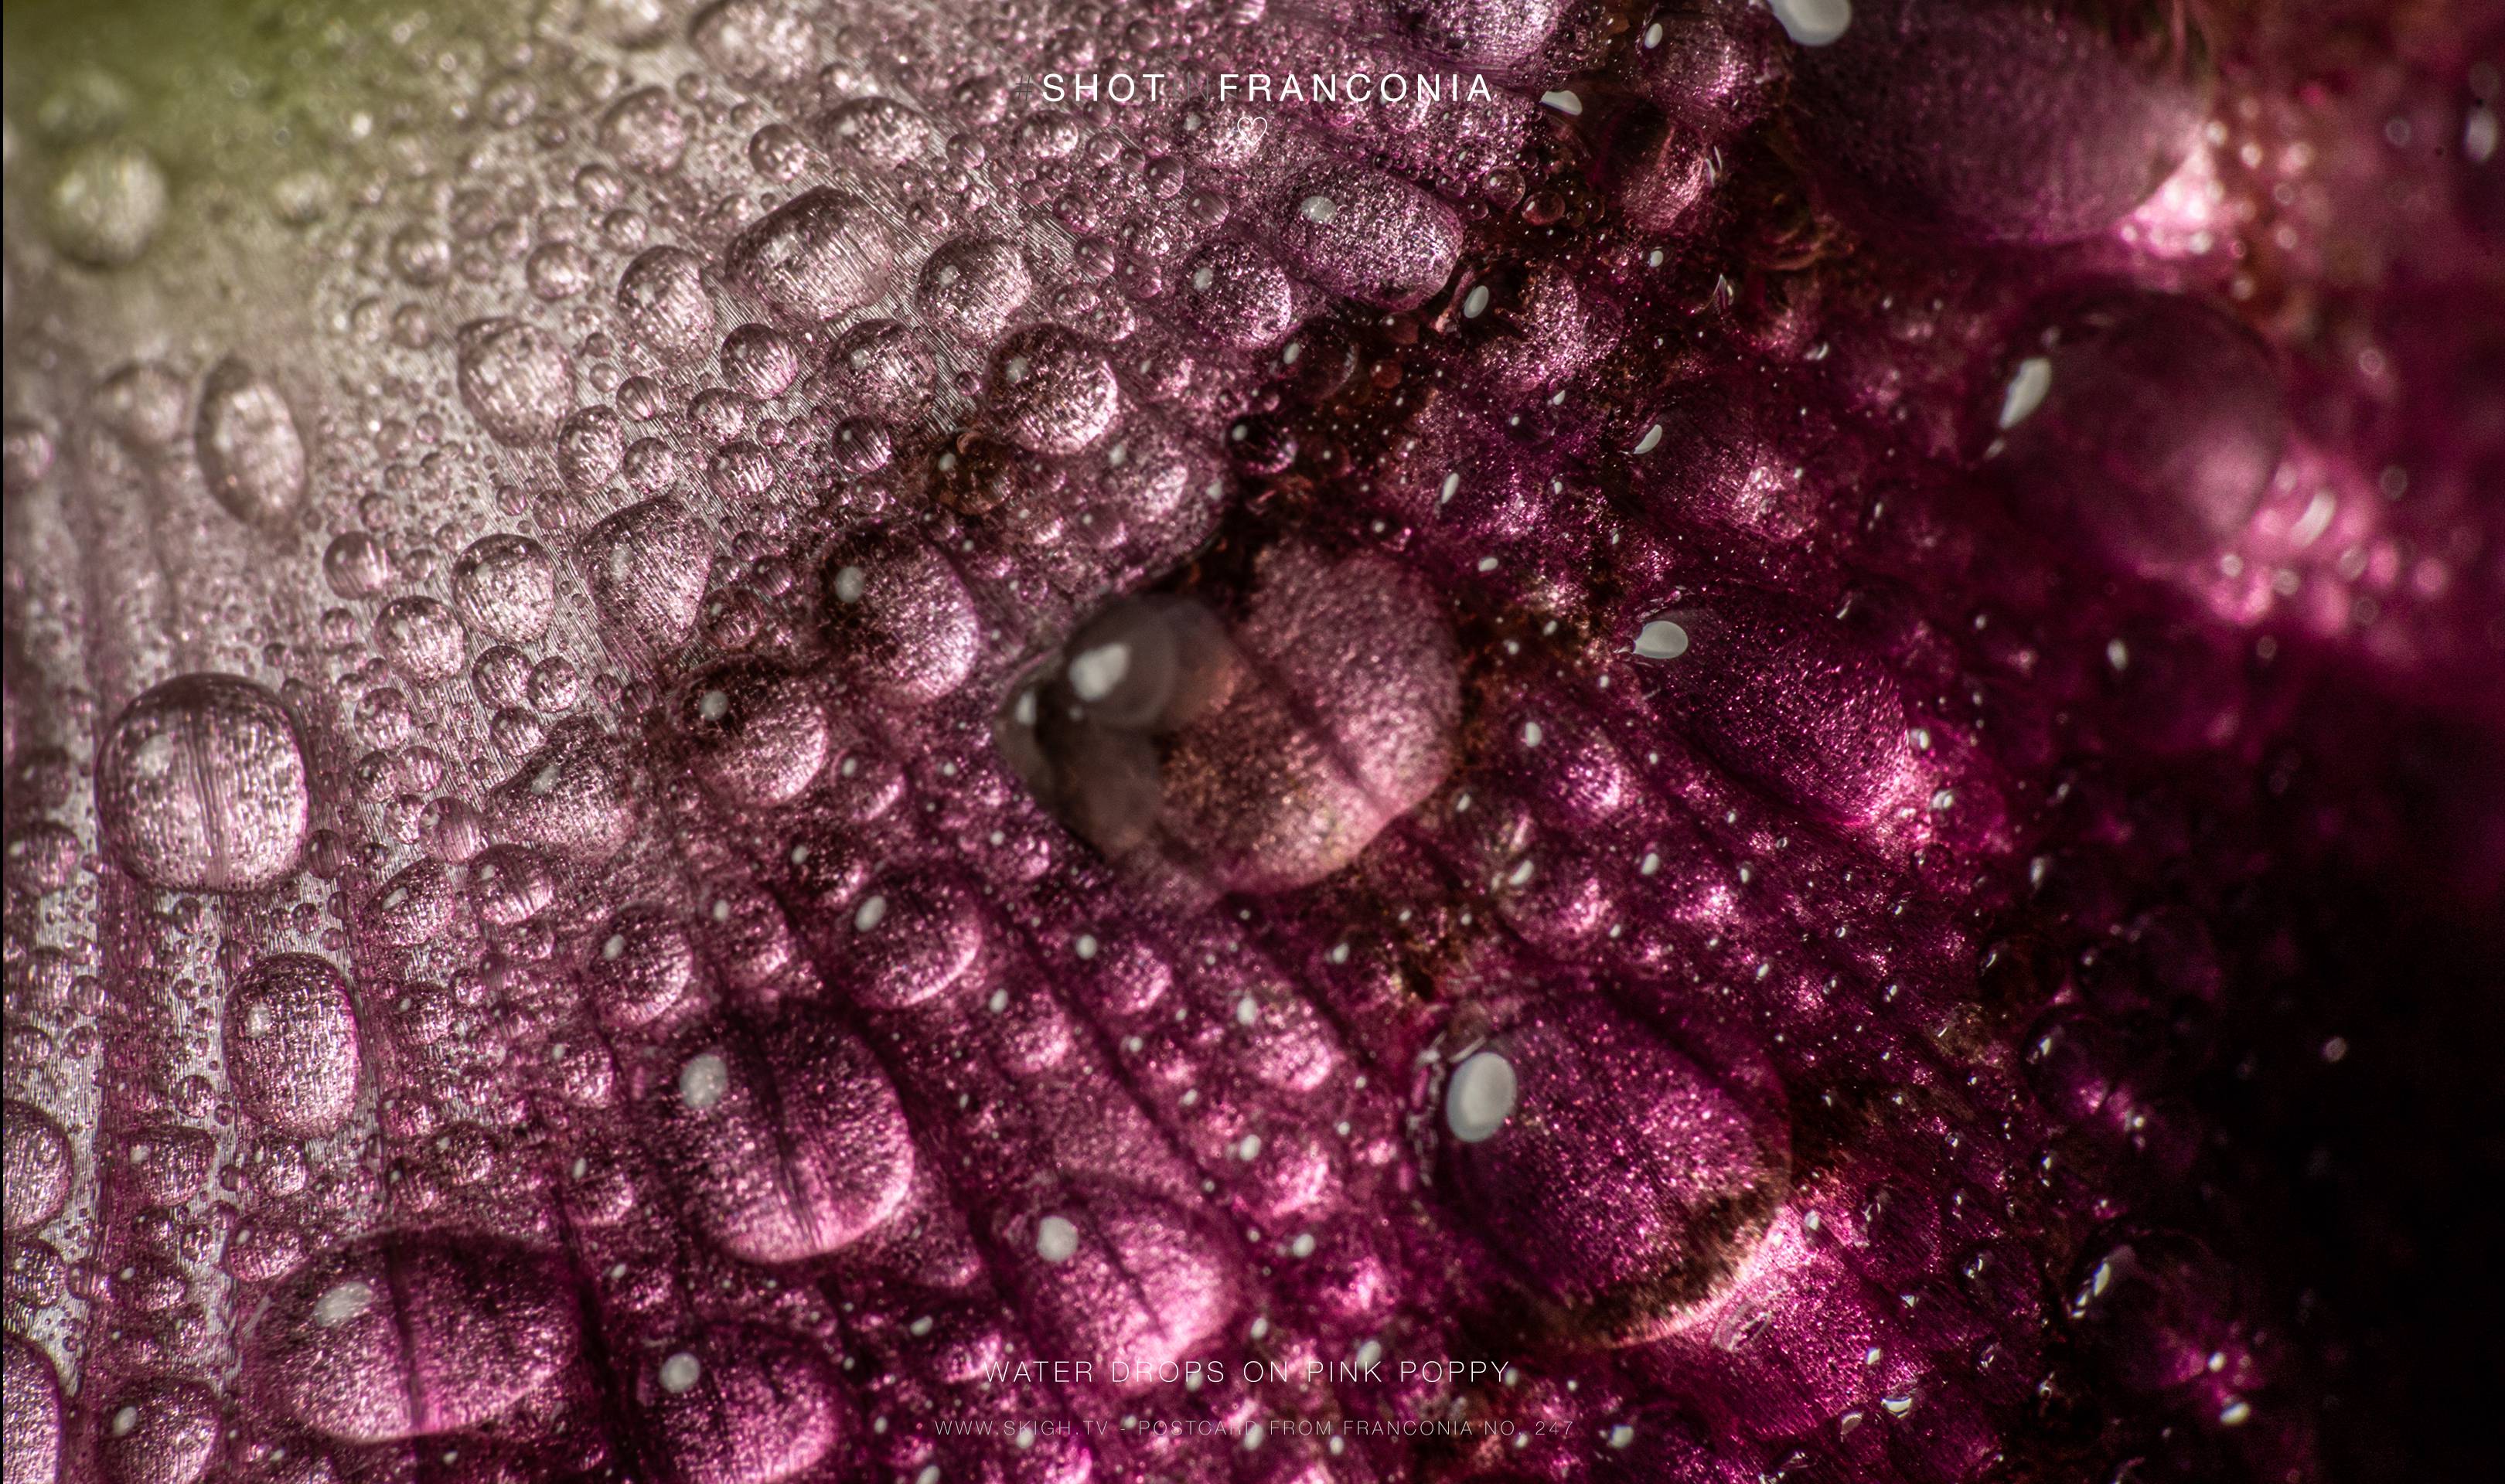 Water drops on pink poppy